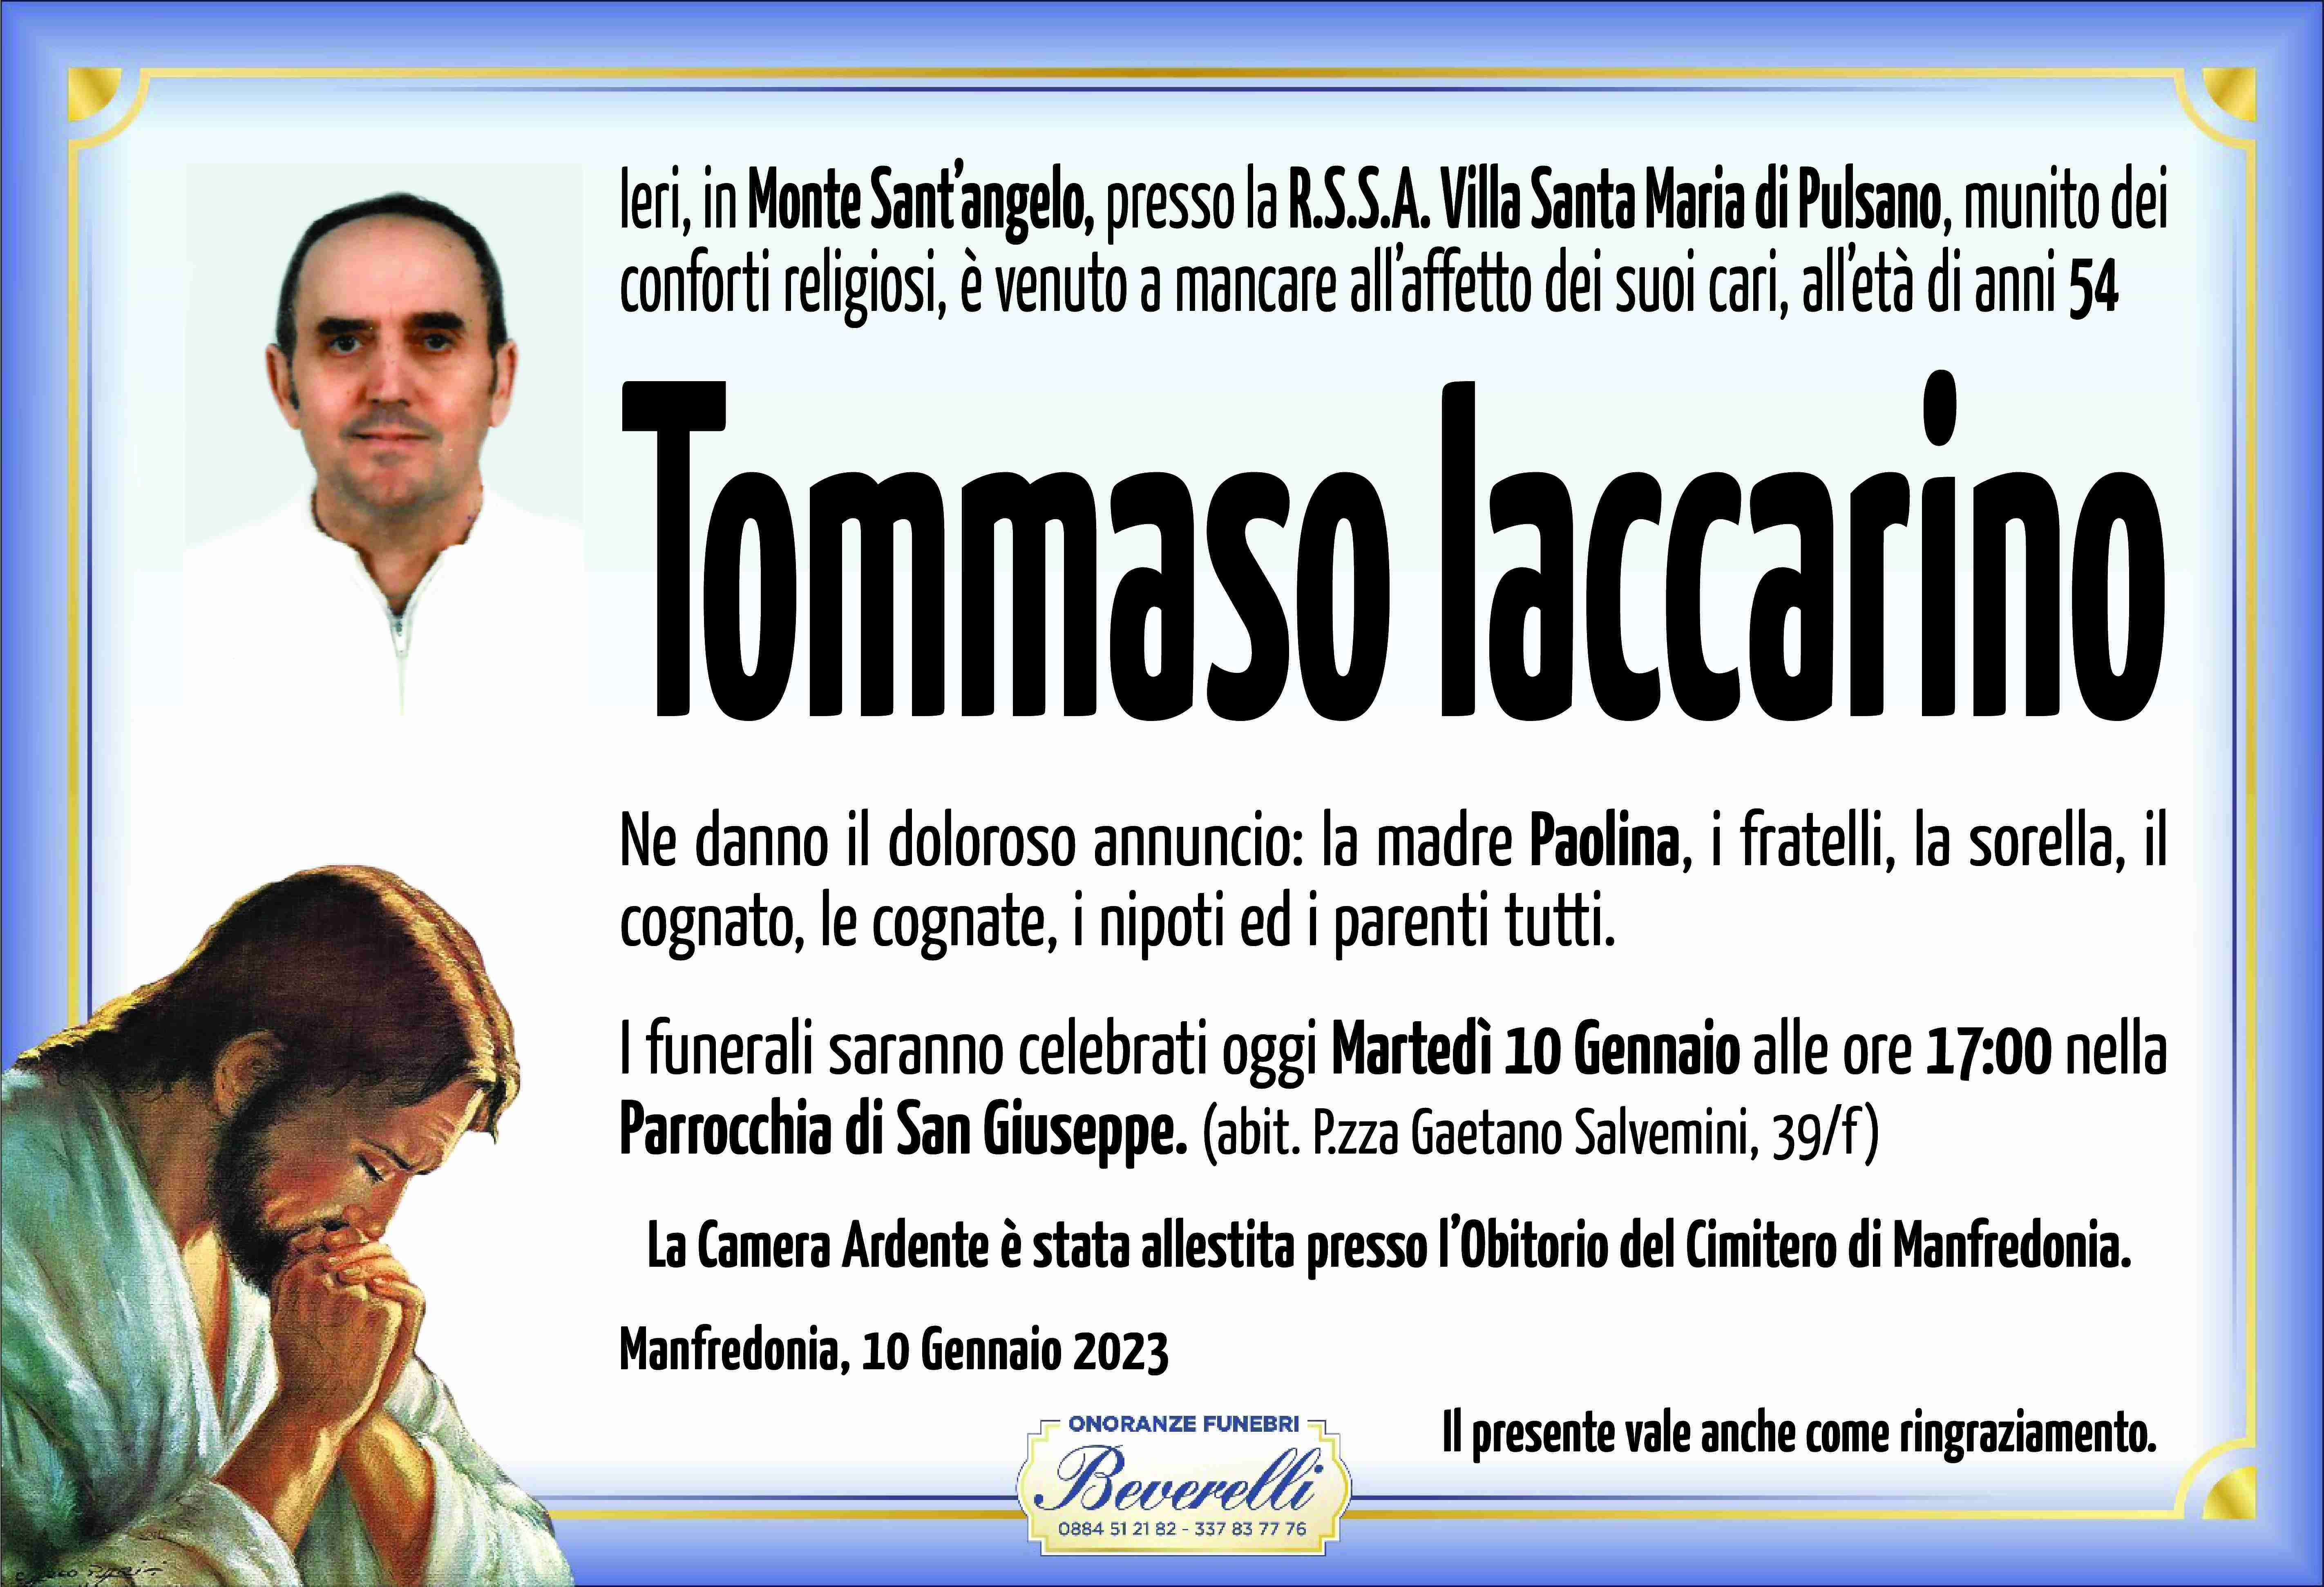 Tommaso Iaccarino